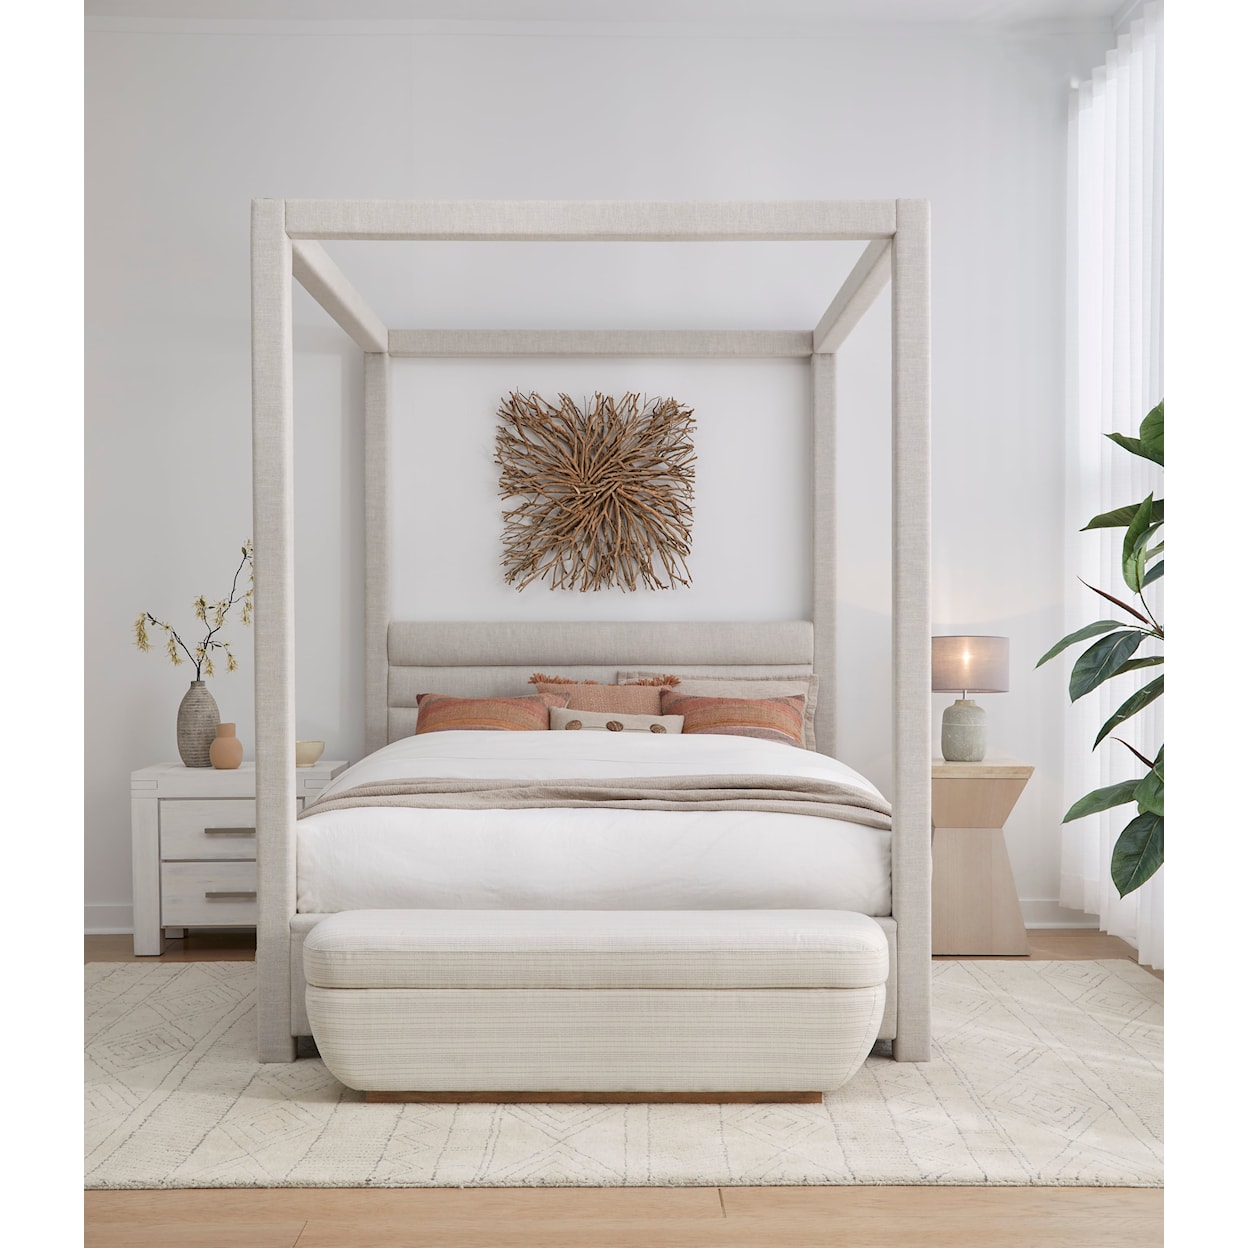 Modus International Rockford King Upholstered Canopy Bed